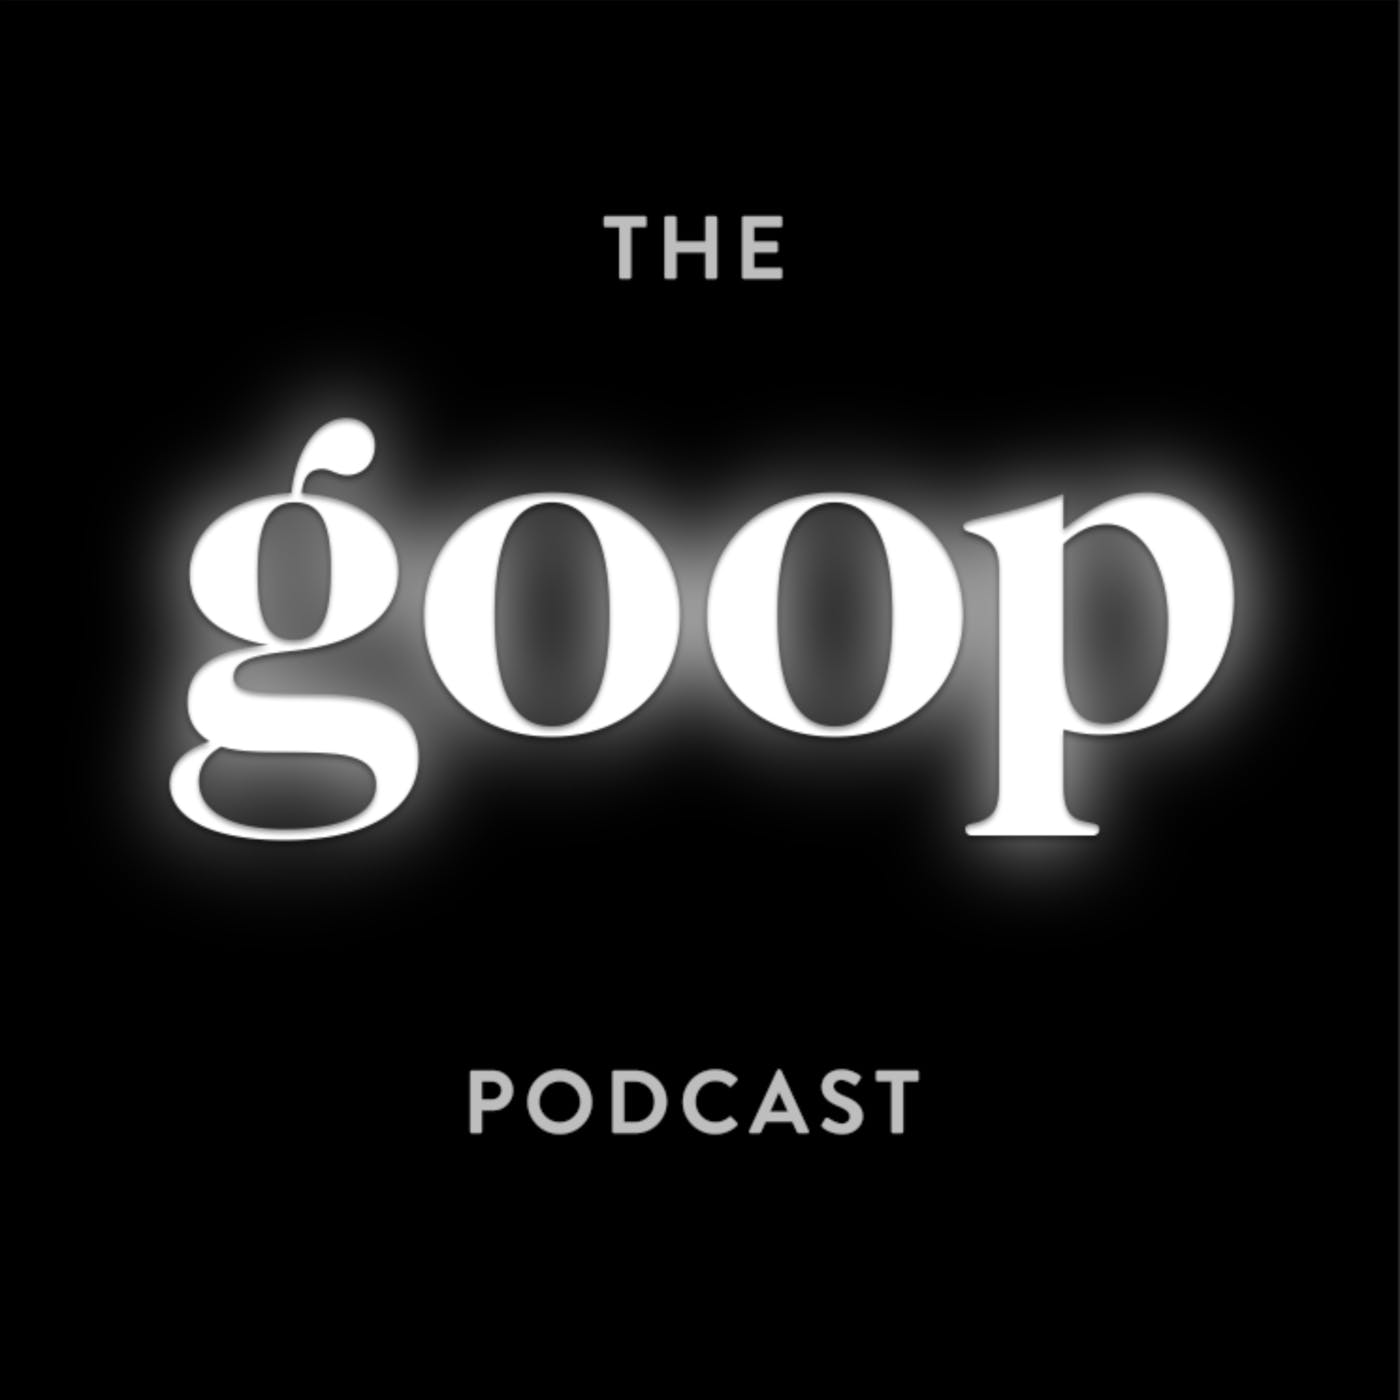 The goop Podcast Intro